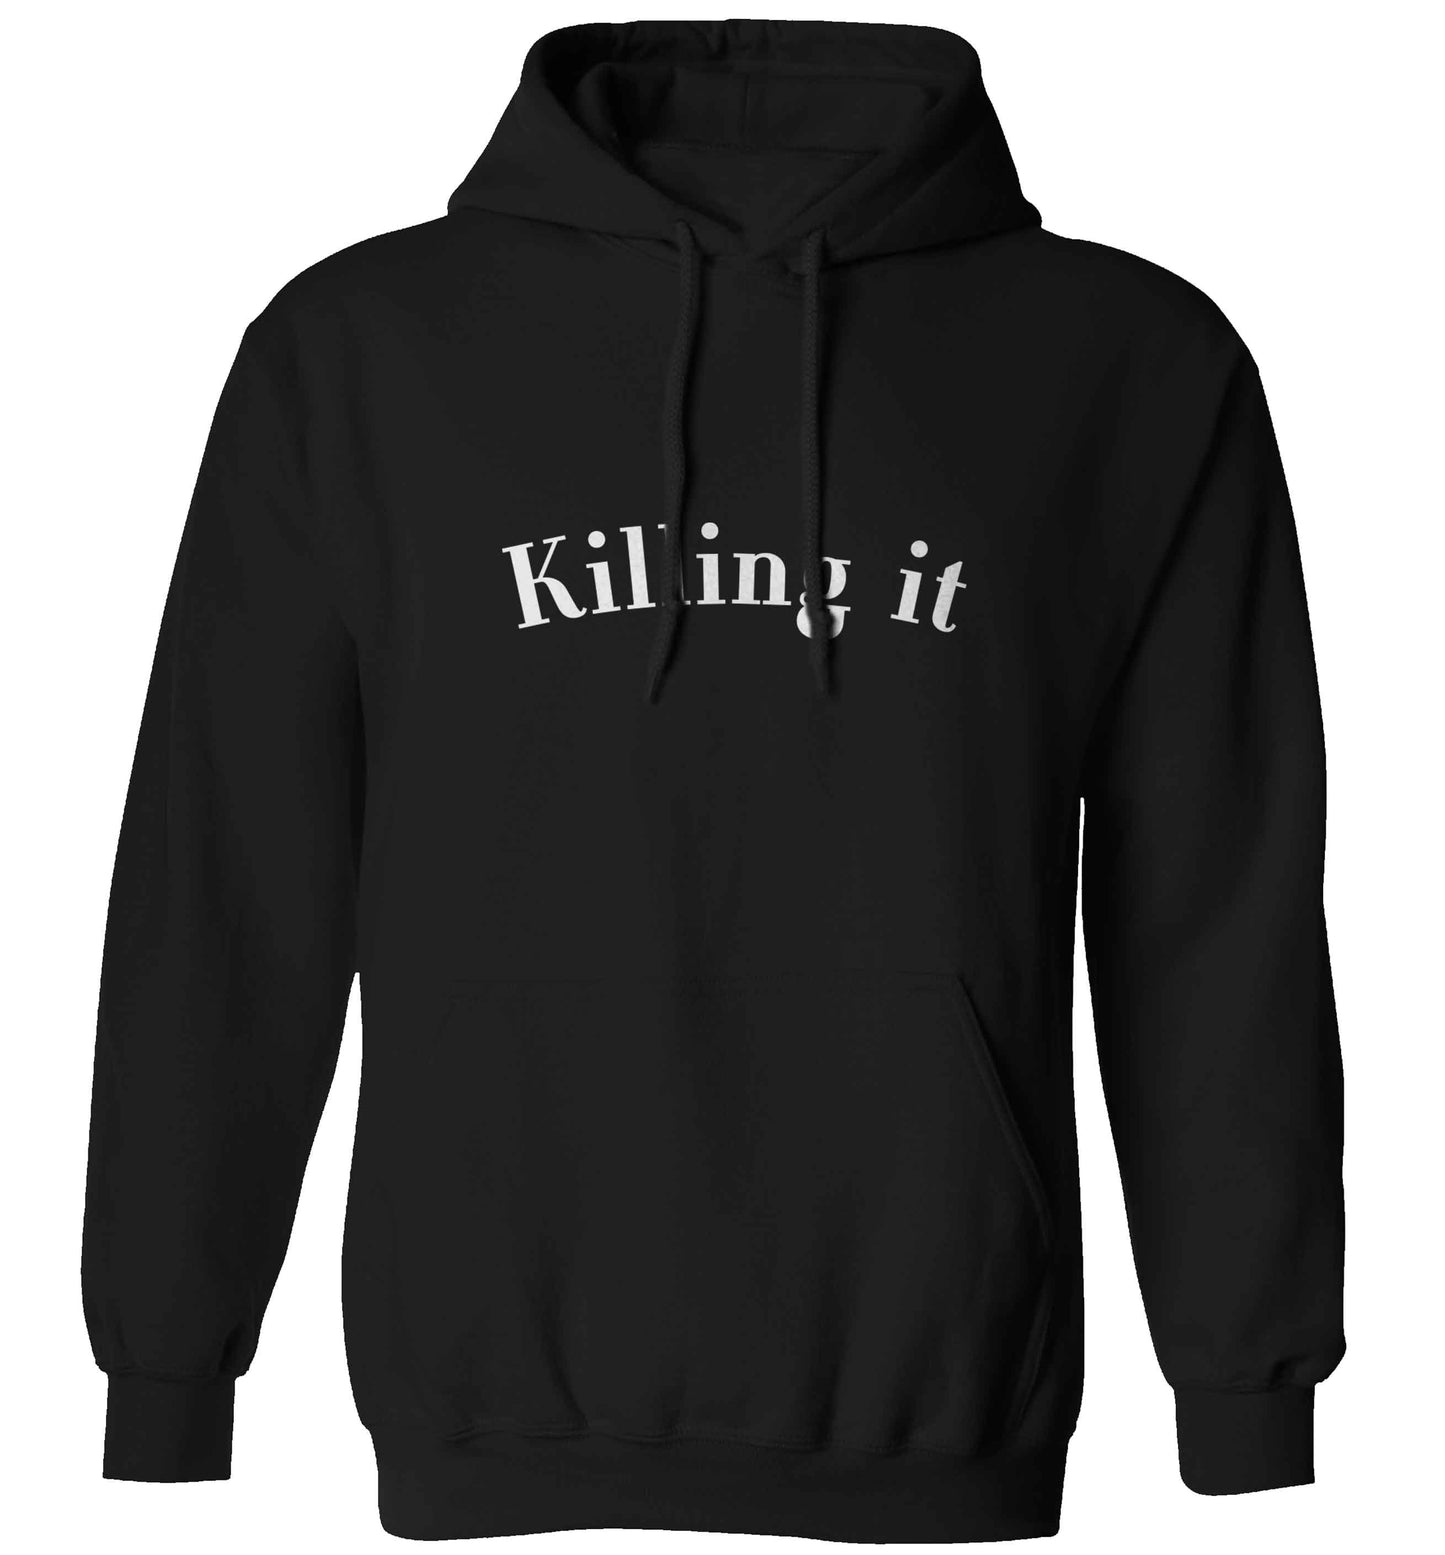 Killing it adults unisex black hoodie 2XL